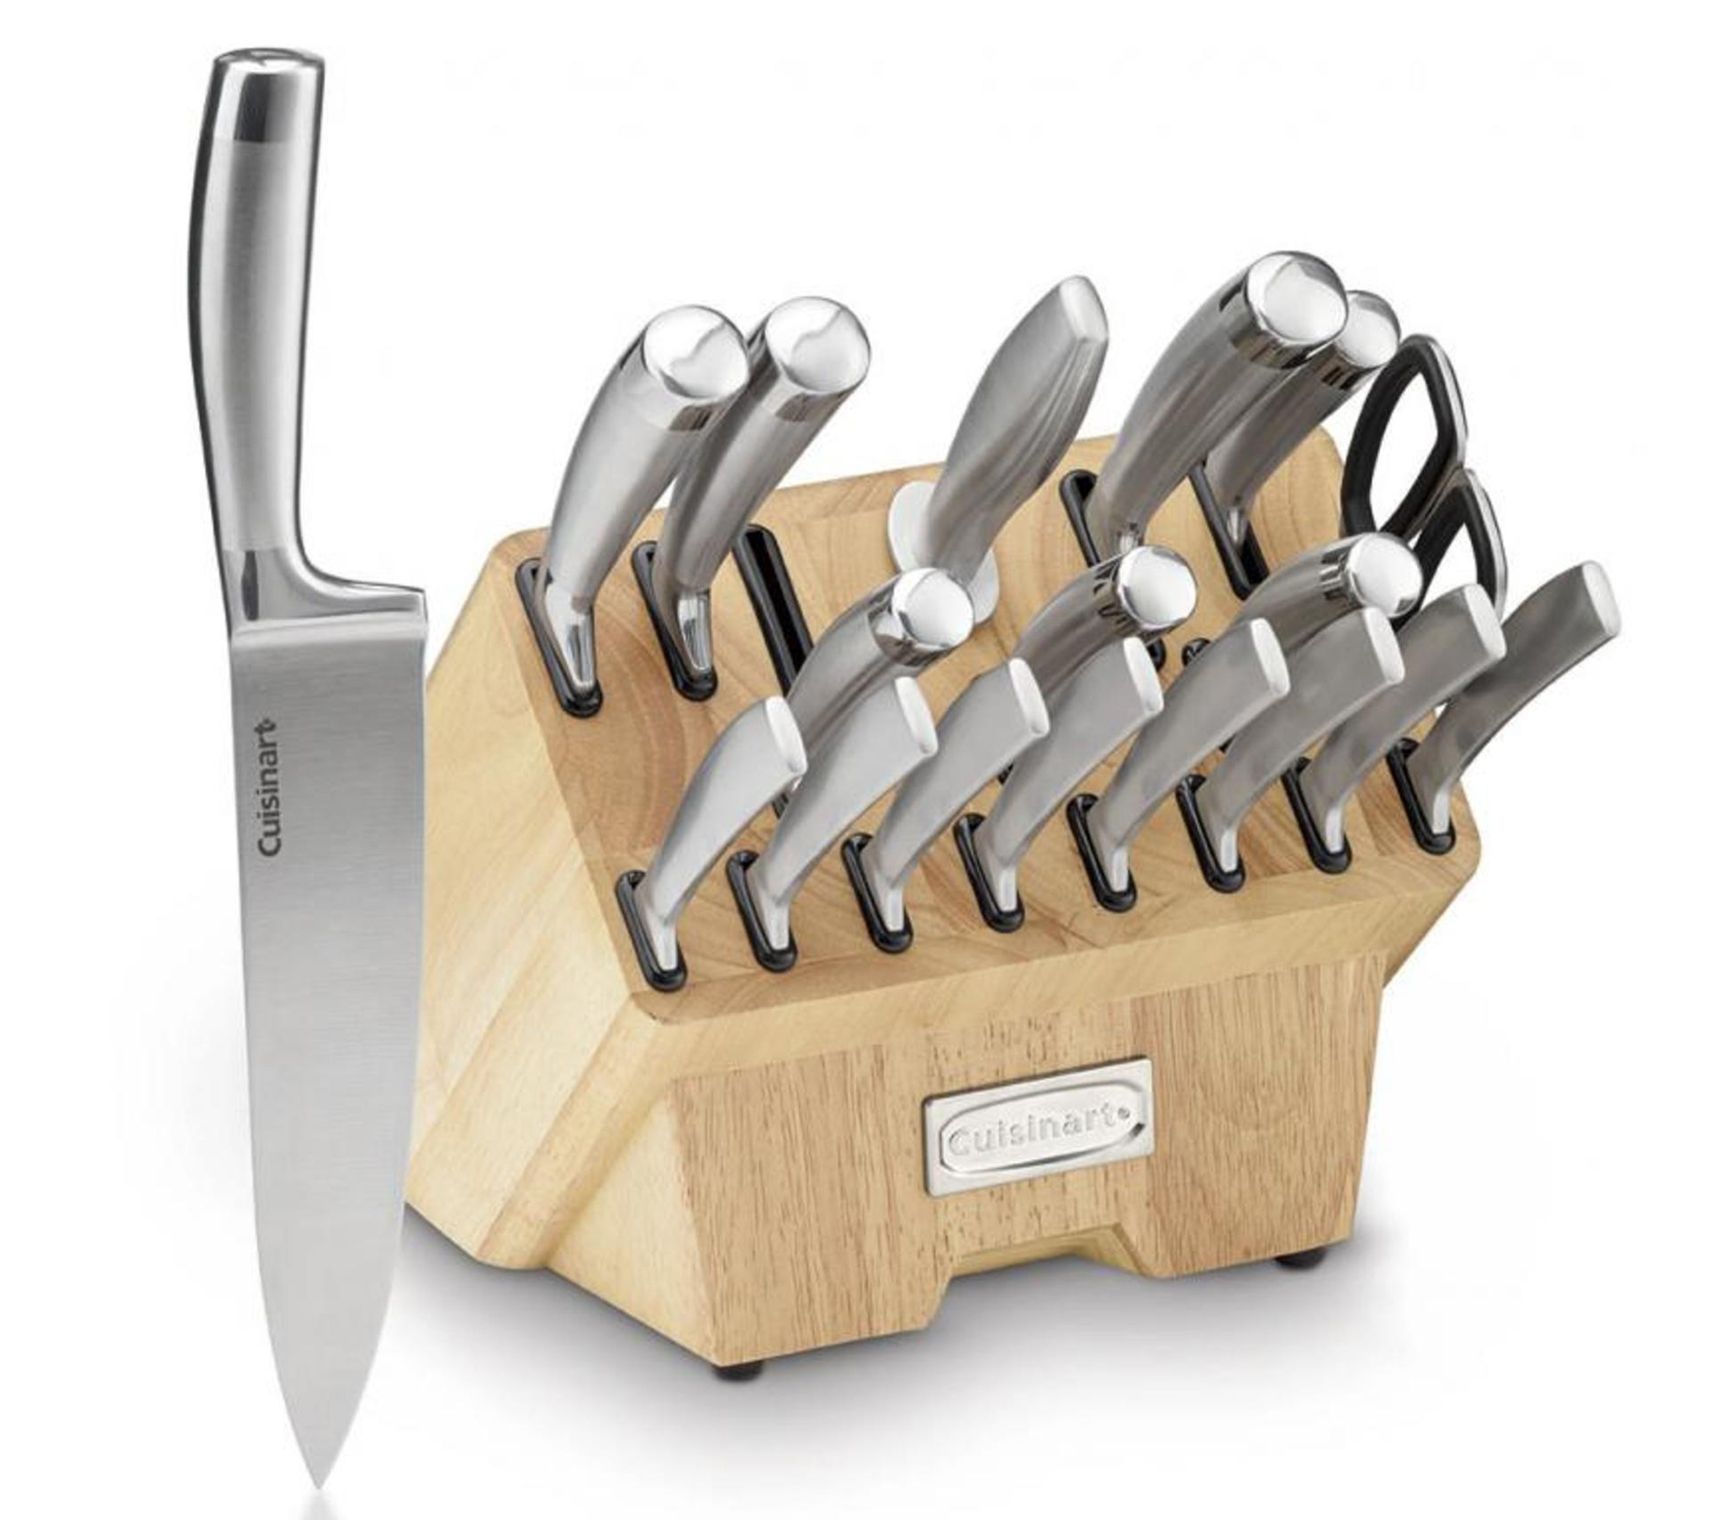 Cuisinart Knives & Cuisinart Knife Sets